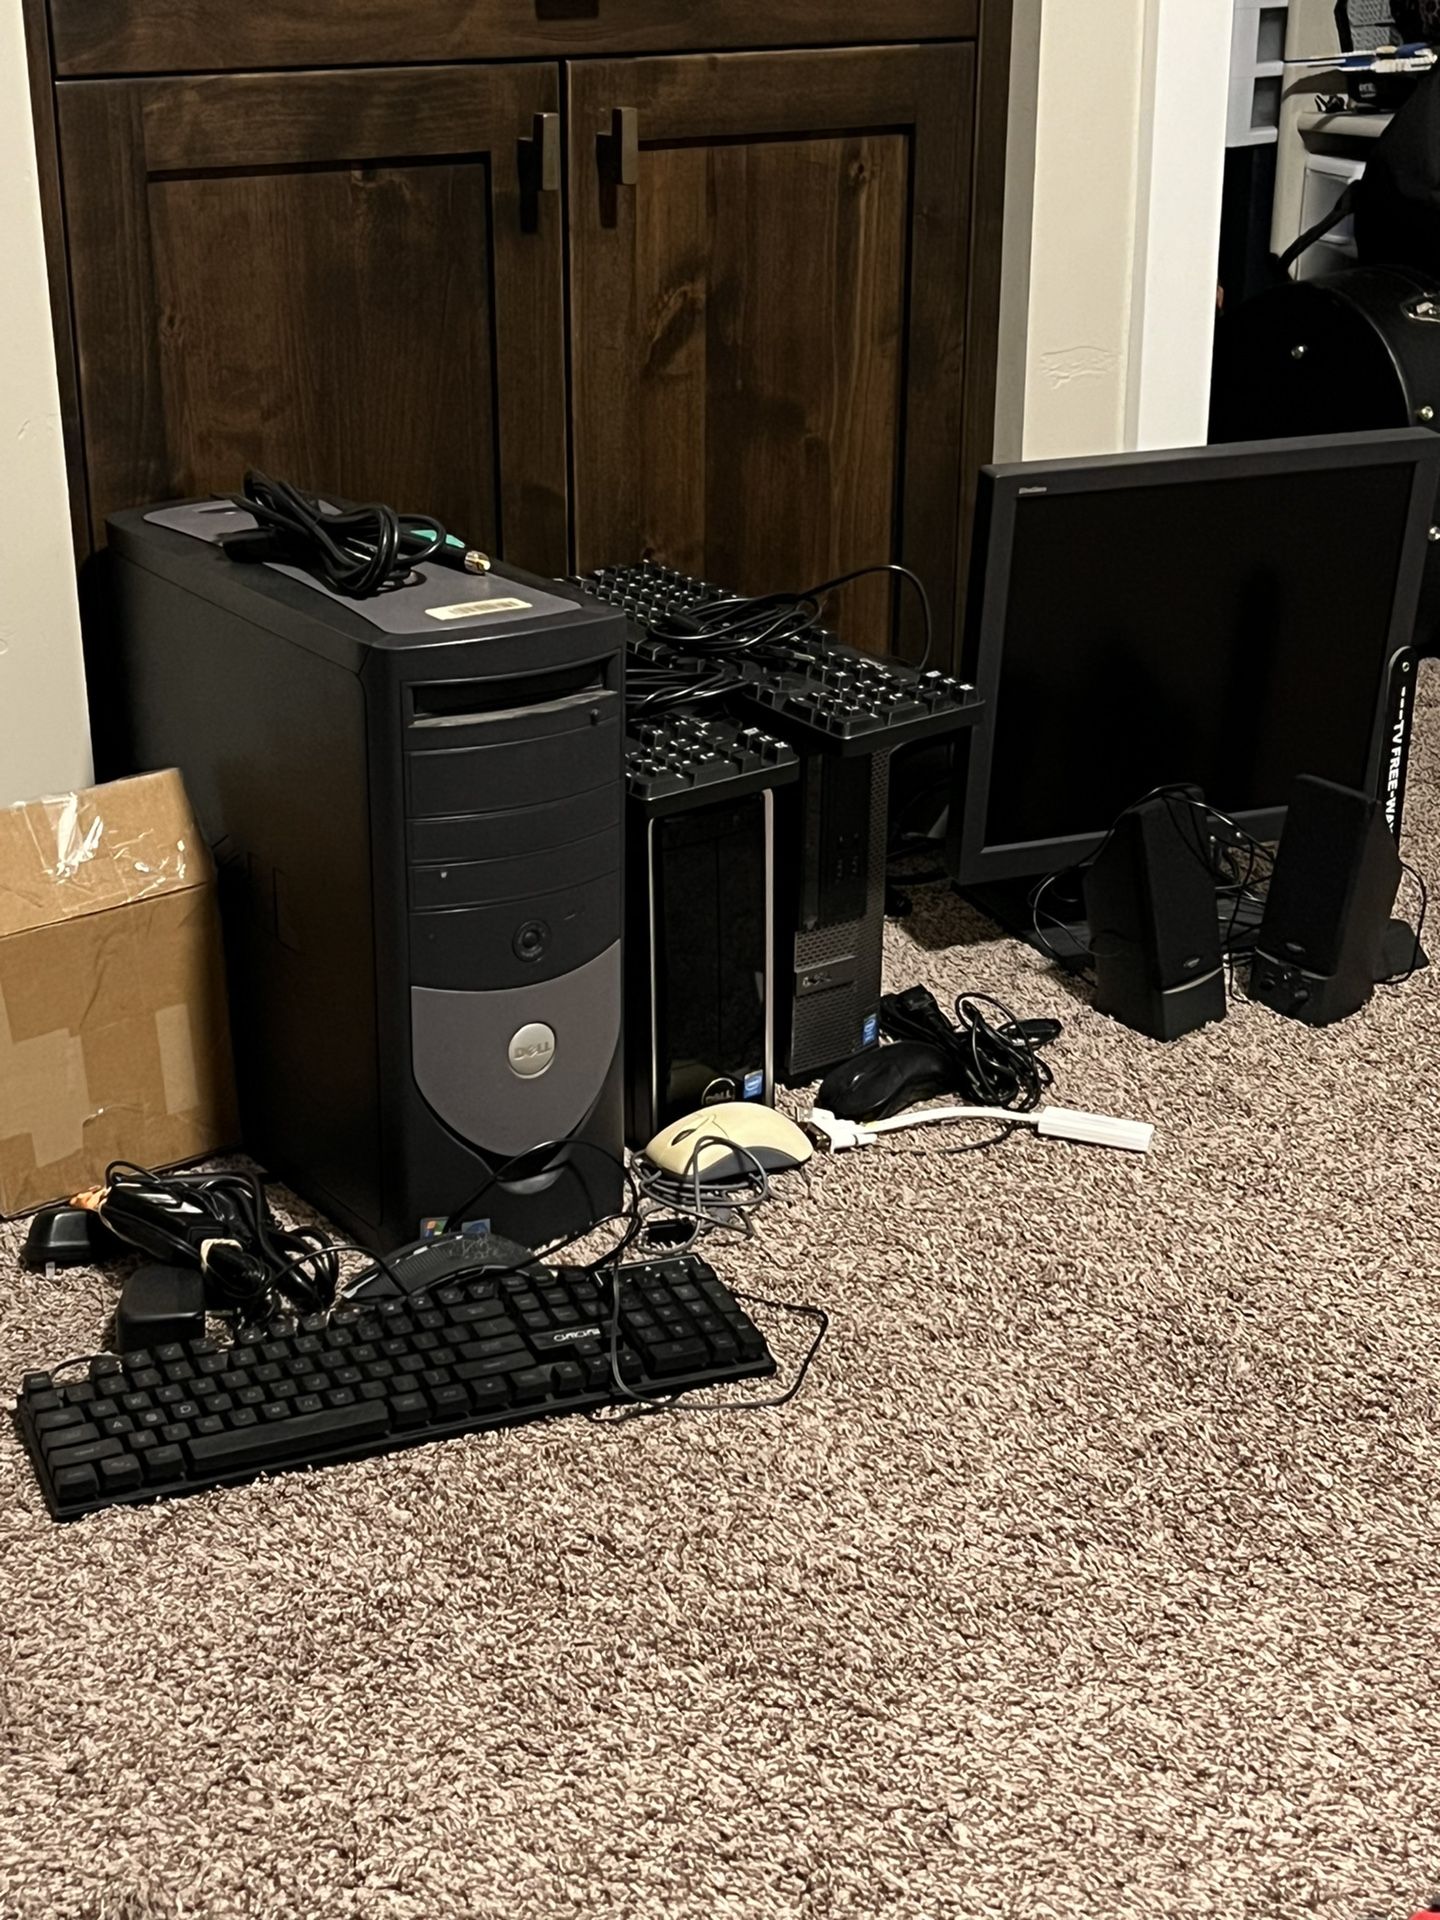 Several PCs and Various Electronics